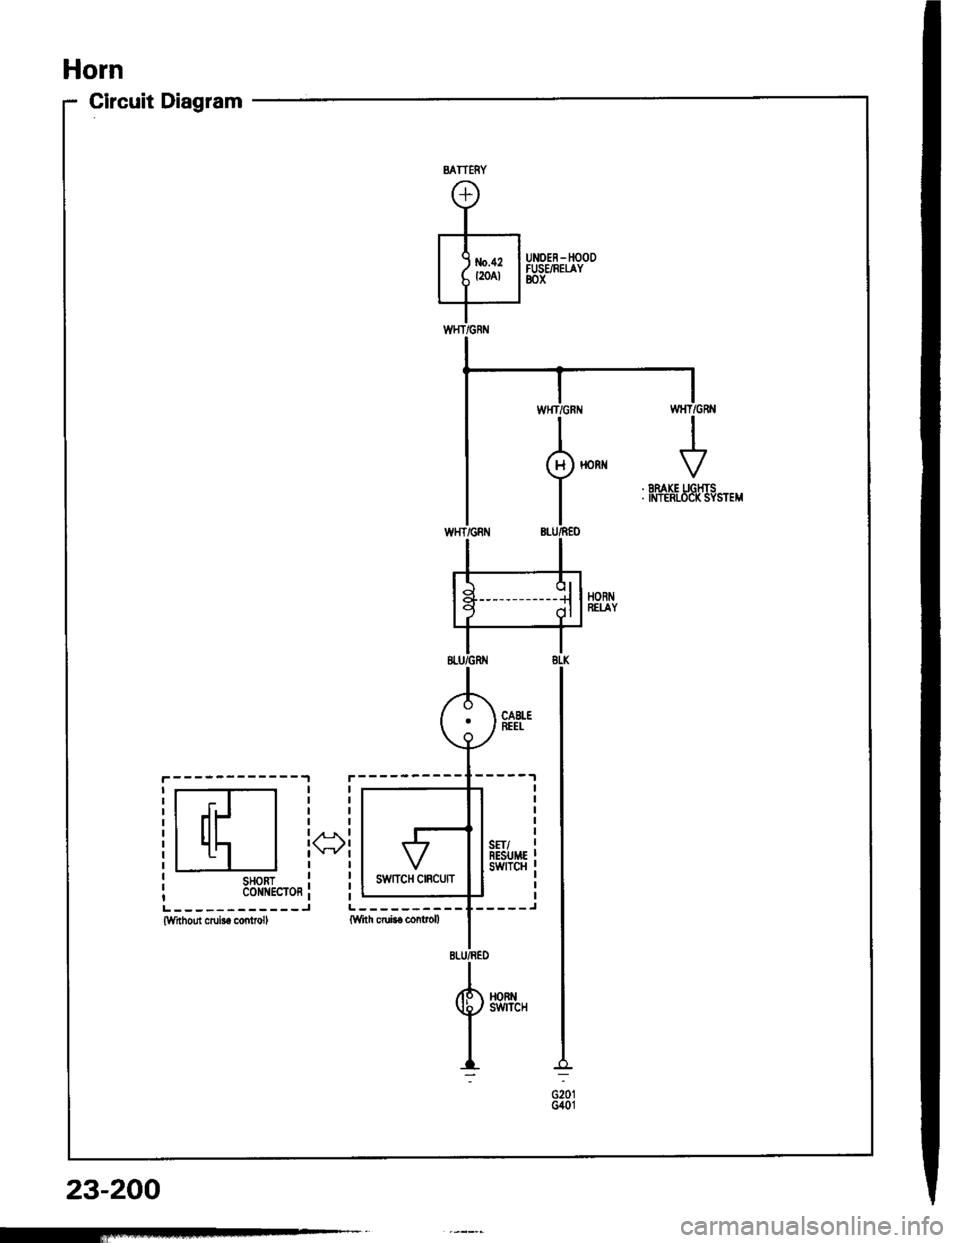 HONDA INTEGRA 1994 4.G Workshop Manual Horn
Circuit Diagram
------------.,1
r-T-l
lll- l
l1l I
SHORTc0ill{EcToR
()
L------------JWrthout crub6 conlrol,
23-200
MTTERY 